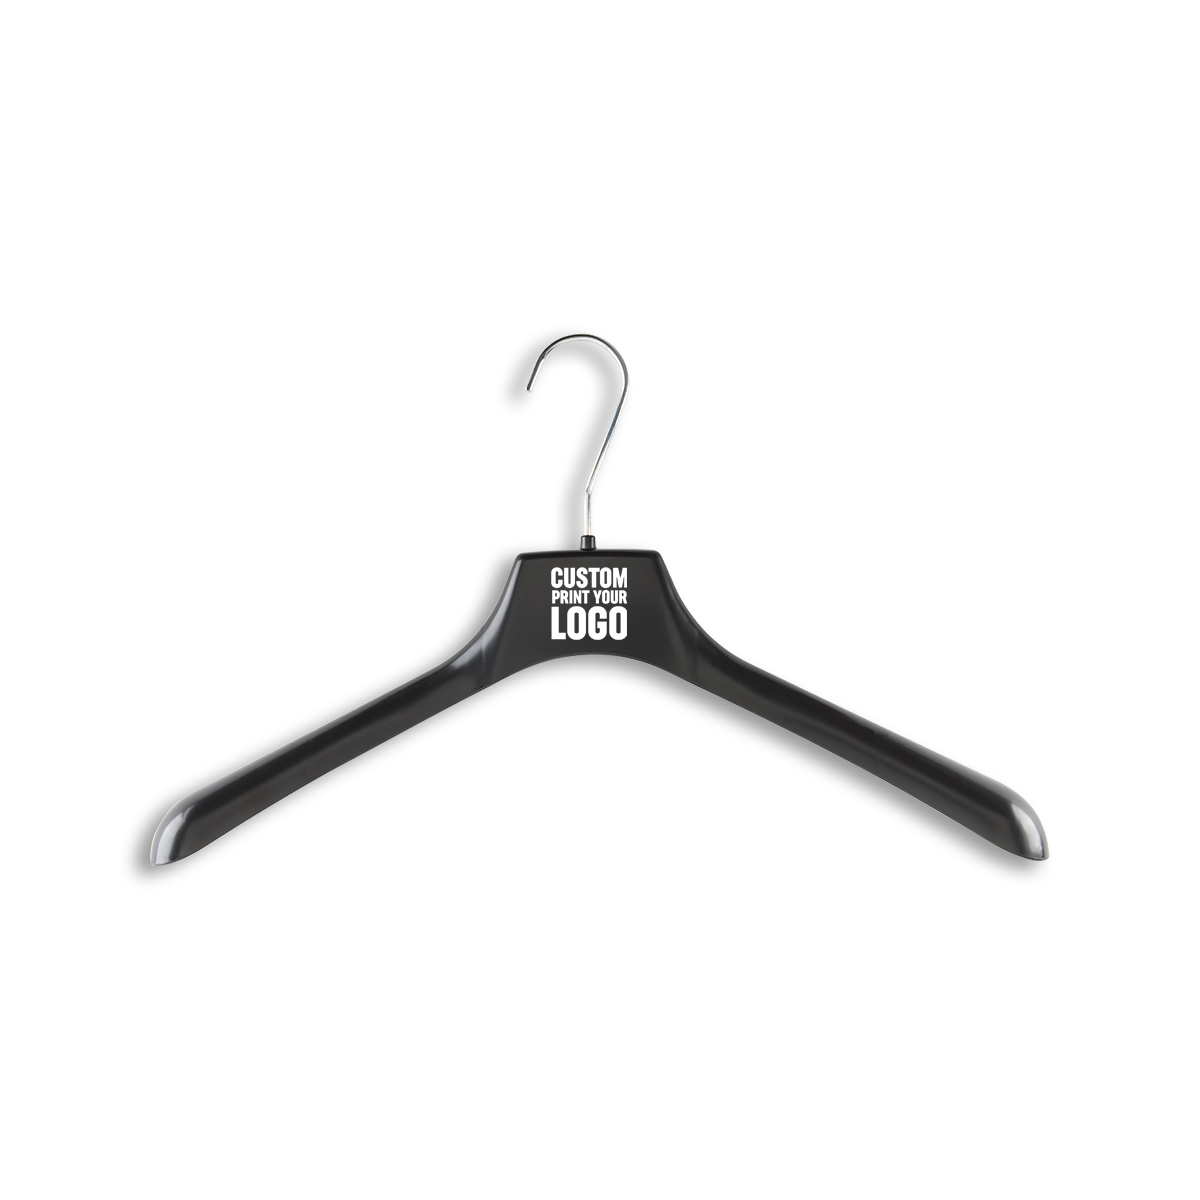 Jacket Plastic Hangers - 16 Length/ 2 Neck - 50/Box - Cleaner's Supply